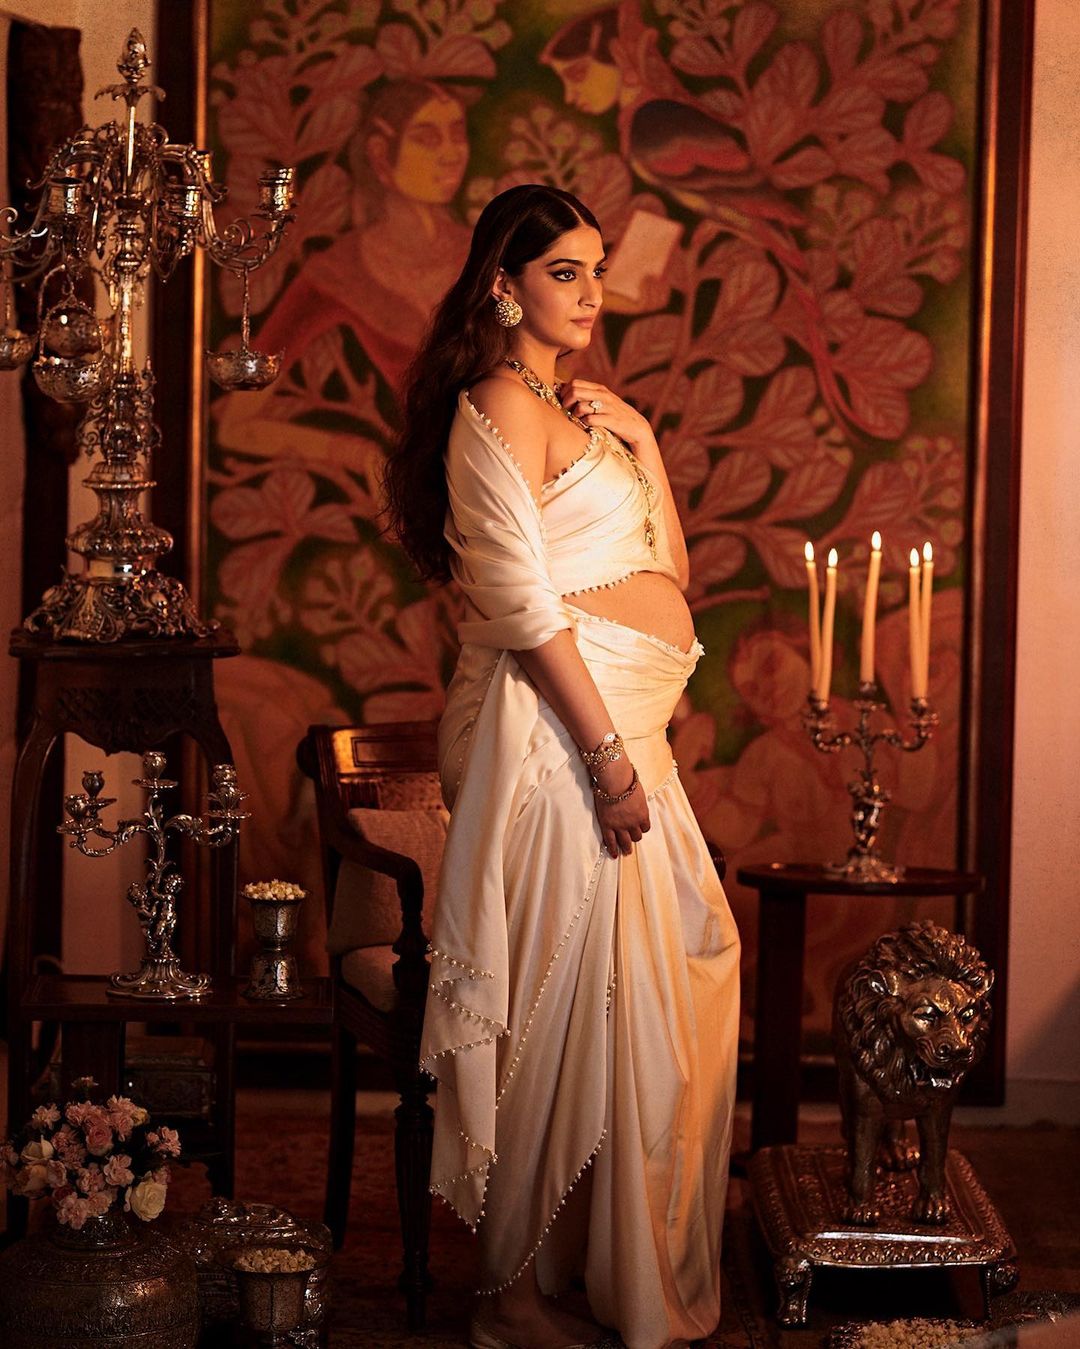 Sonam Kapoor looks rop-dead gorgeous displaying her baby bump